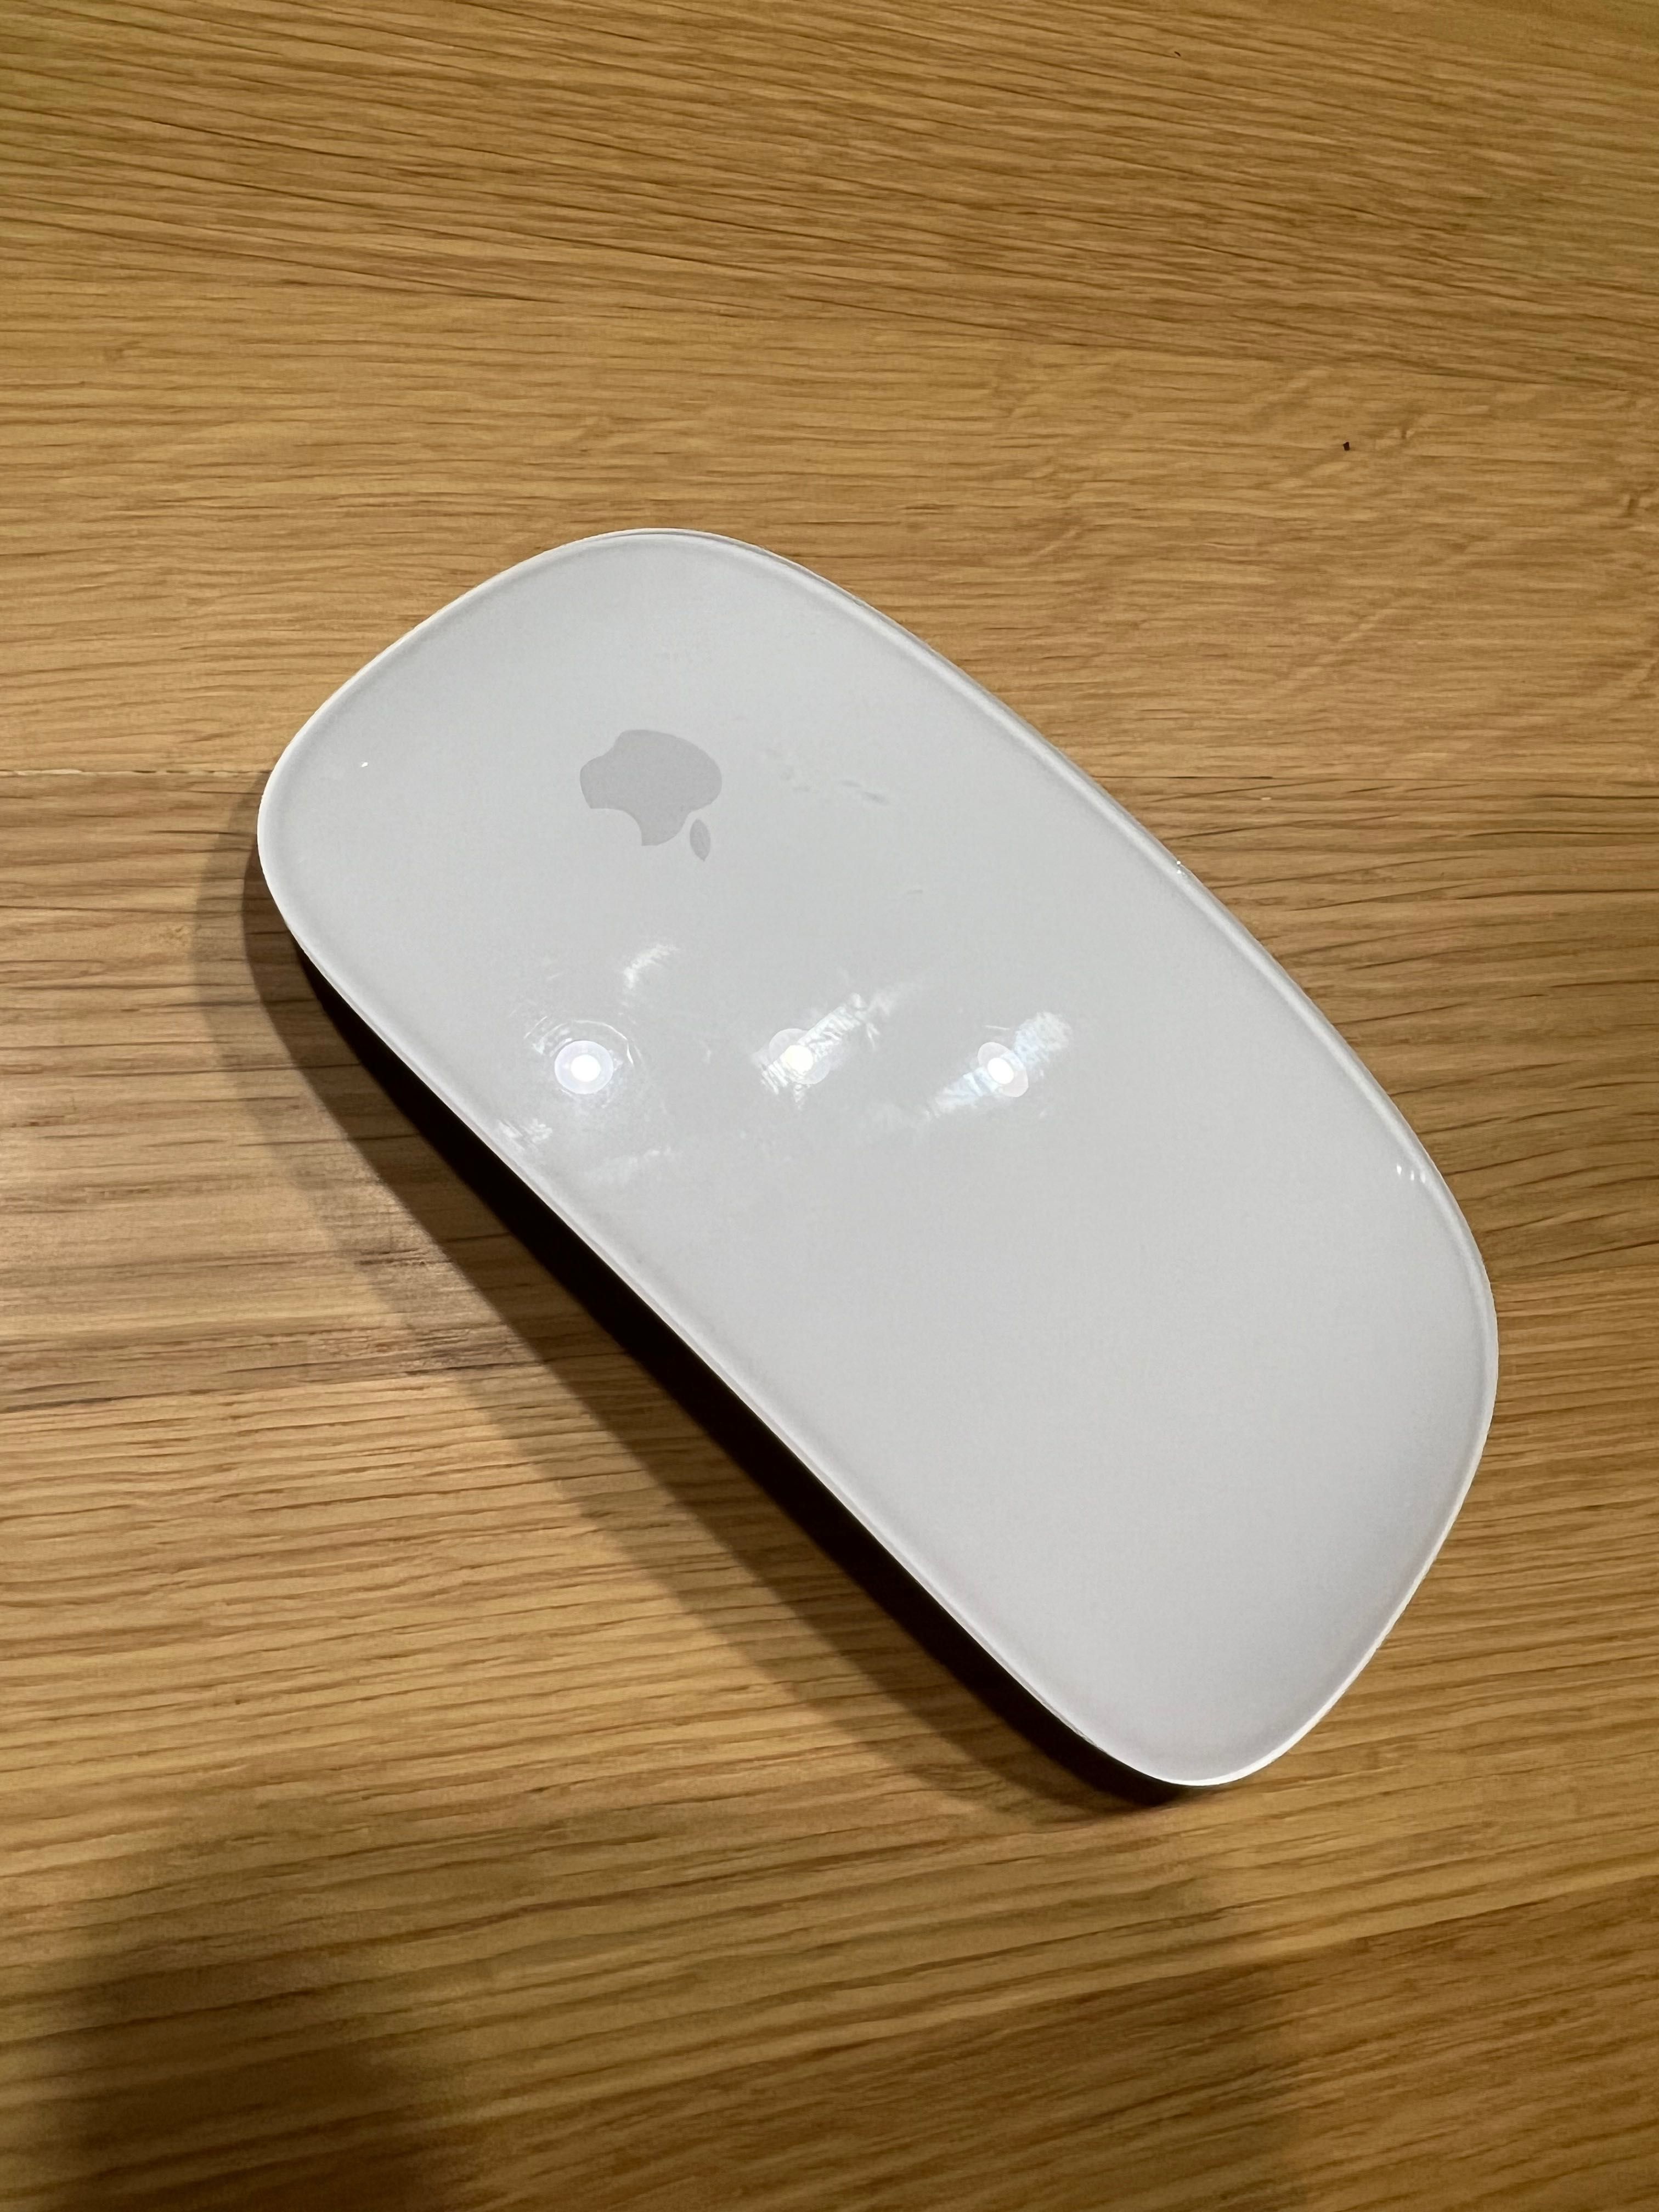 MacBook Air jak nowy + mysz apple